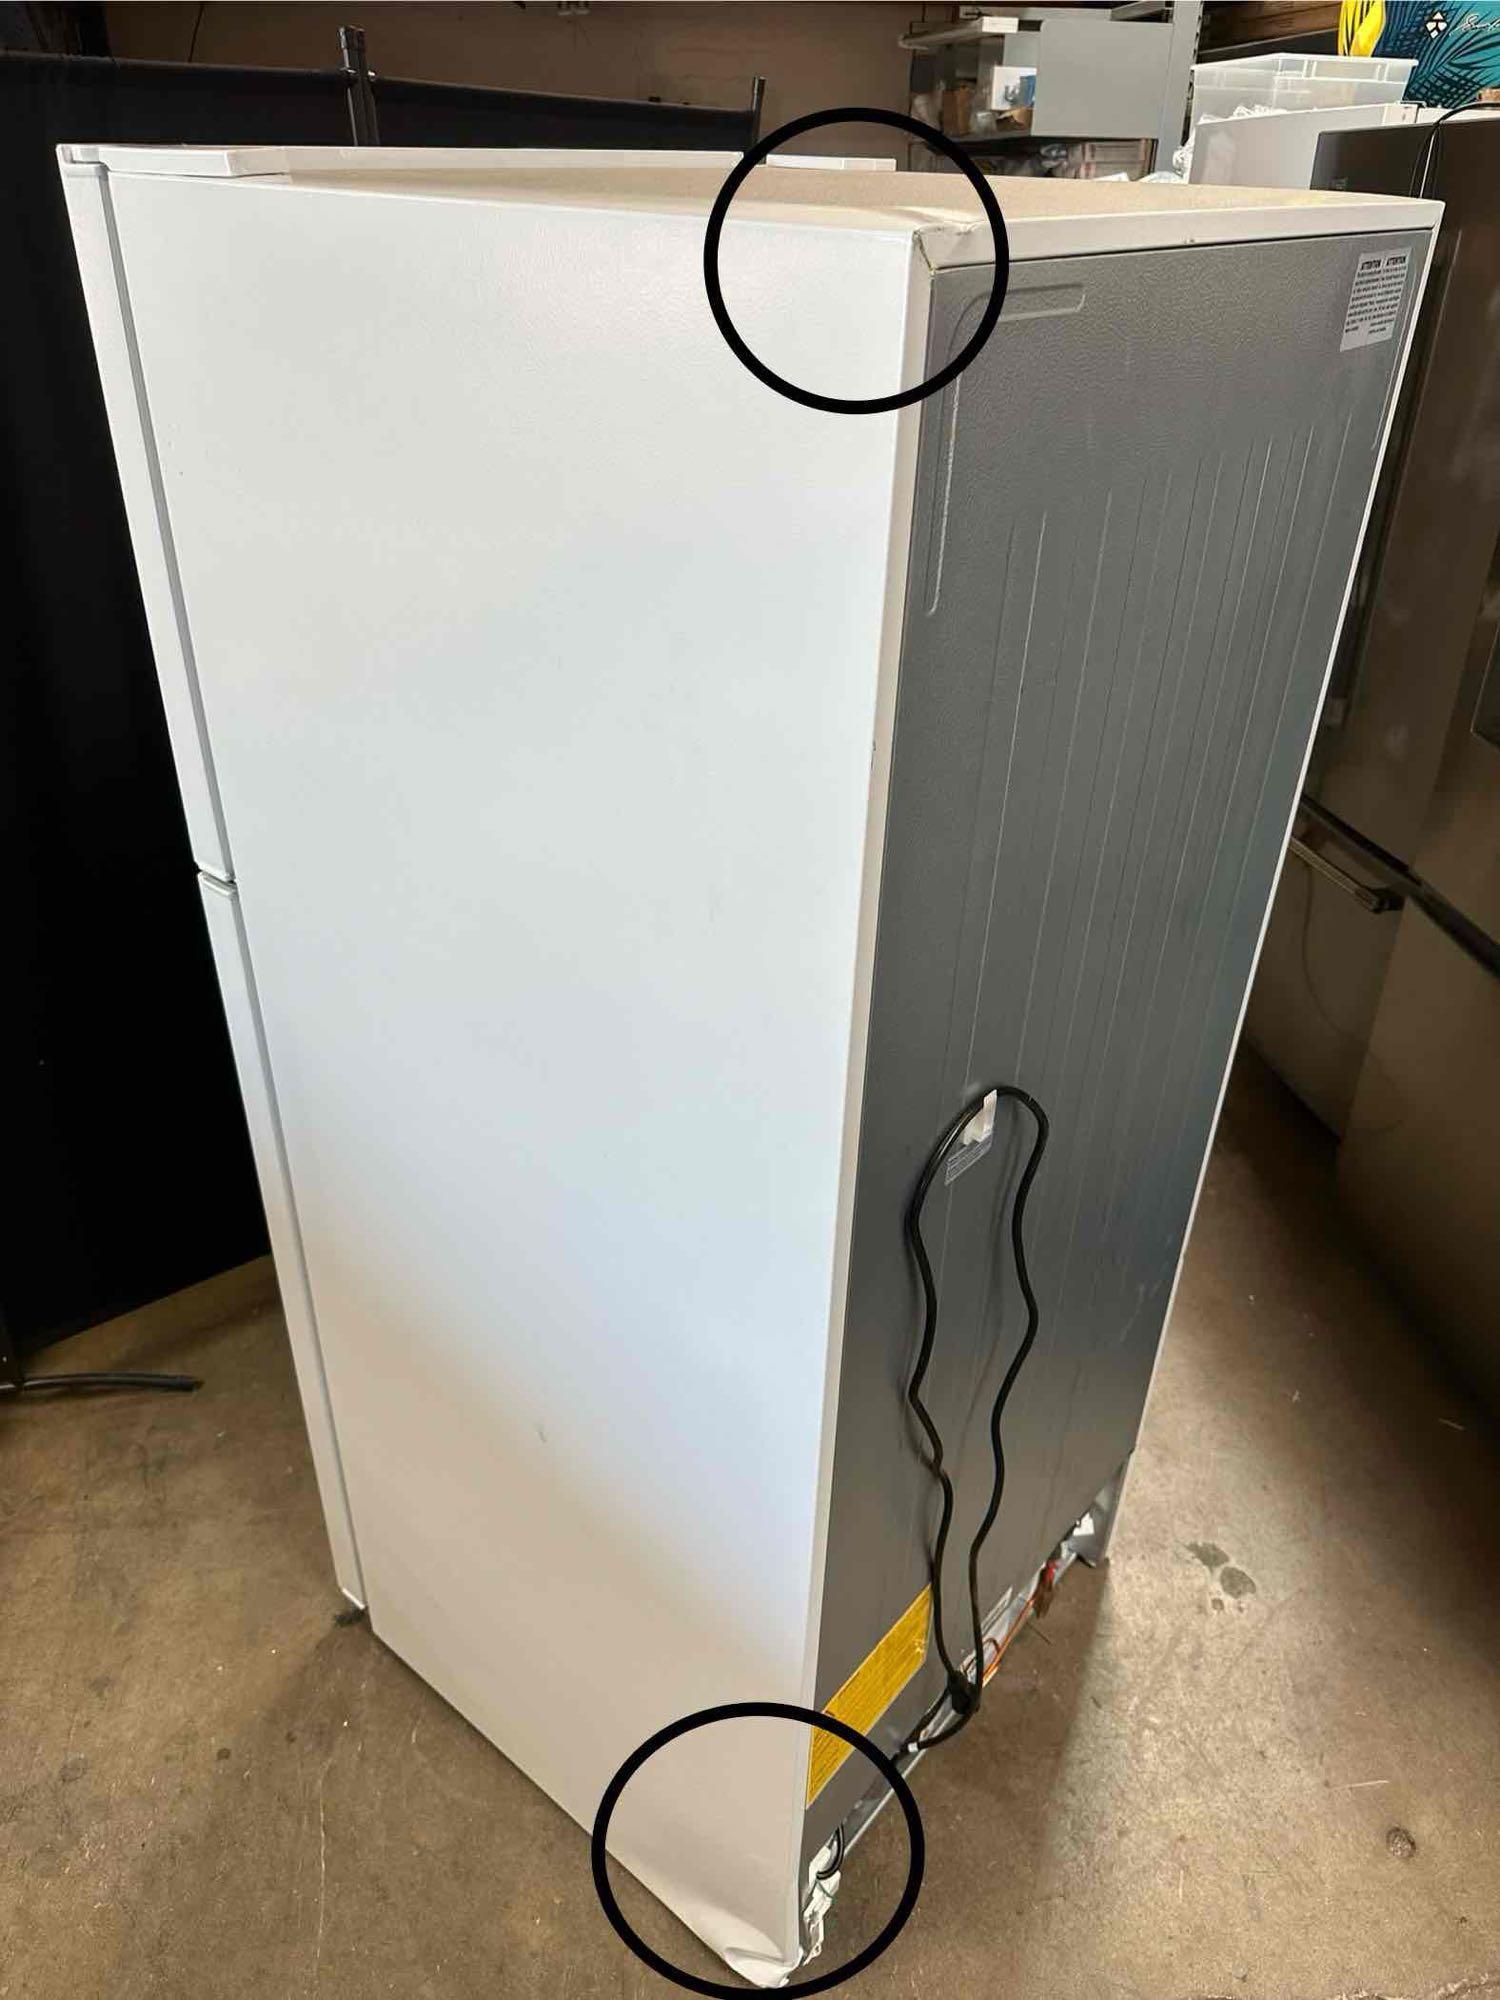 Insignia - 18 Cu. Ft. Top-Freezer Refrigerator with Handles - White